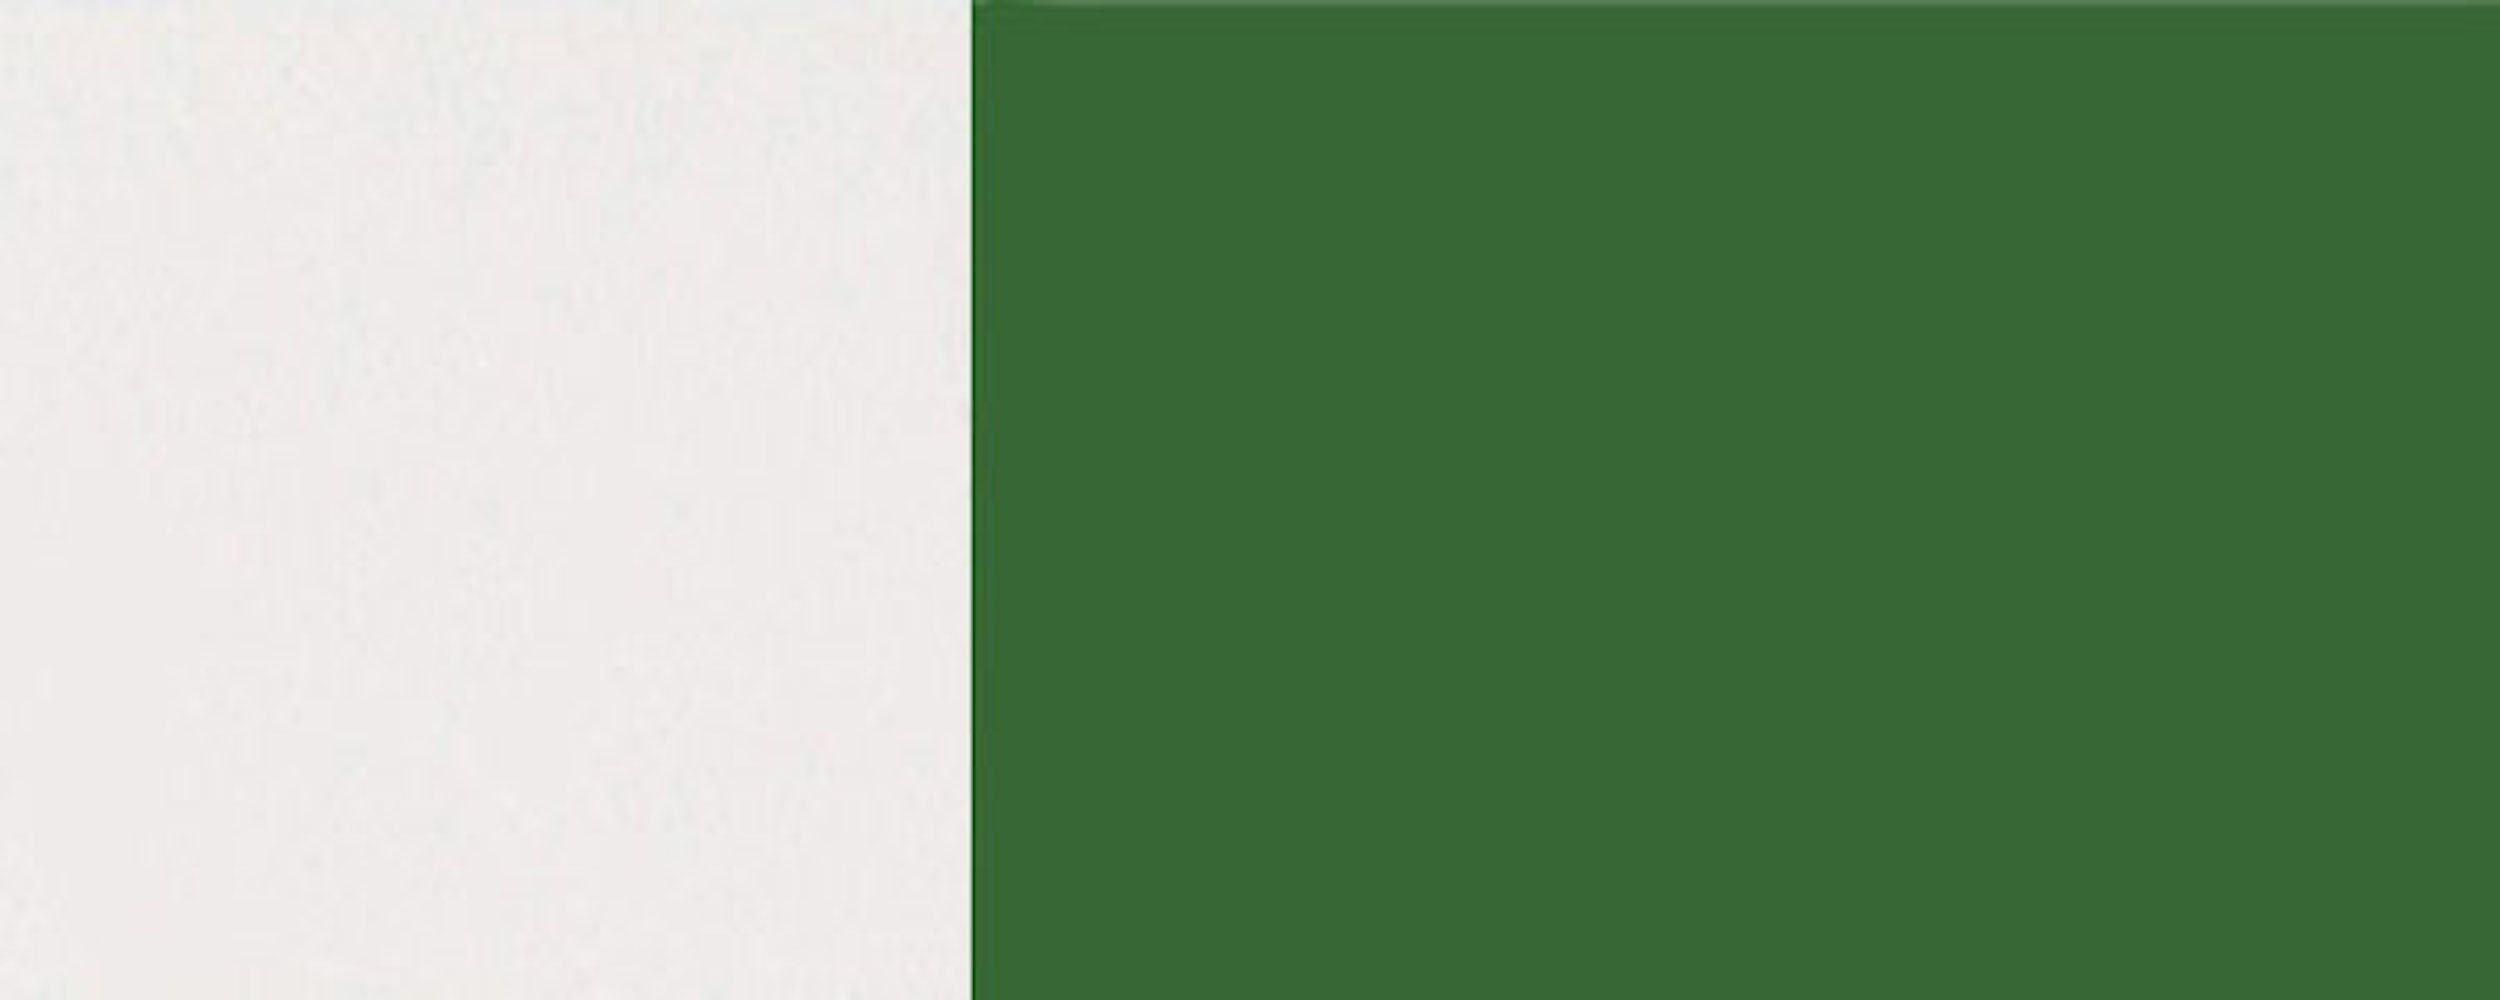 45cm und wählbar 6001 Feldmann-Wohnen Florence RAL Ausführung Korpusfarbe (Florence) Hochglanz Front-, smaragdgrün Klapphängeschrank grifflos 1-türig